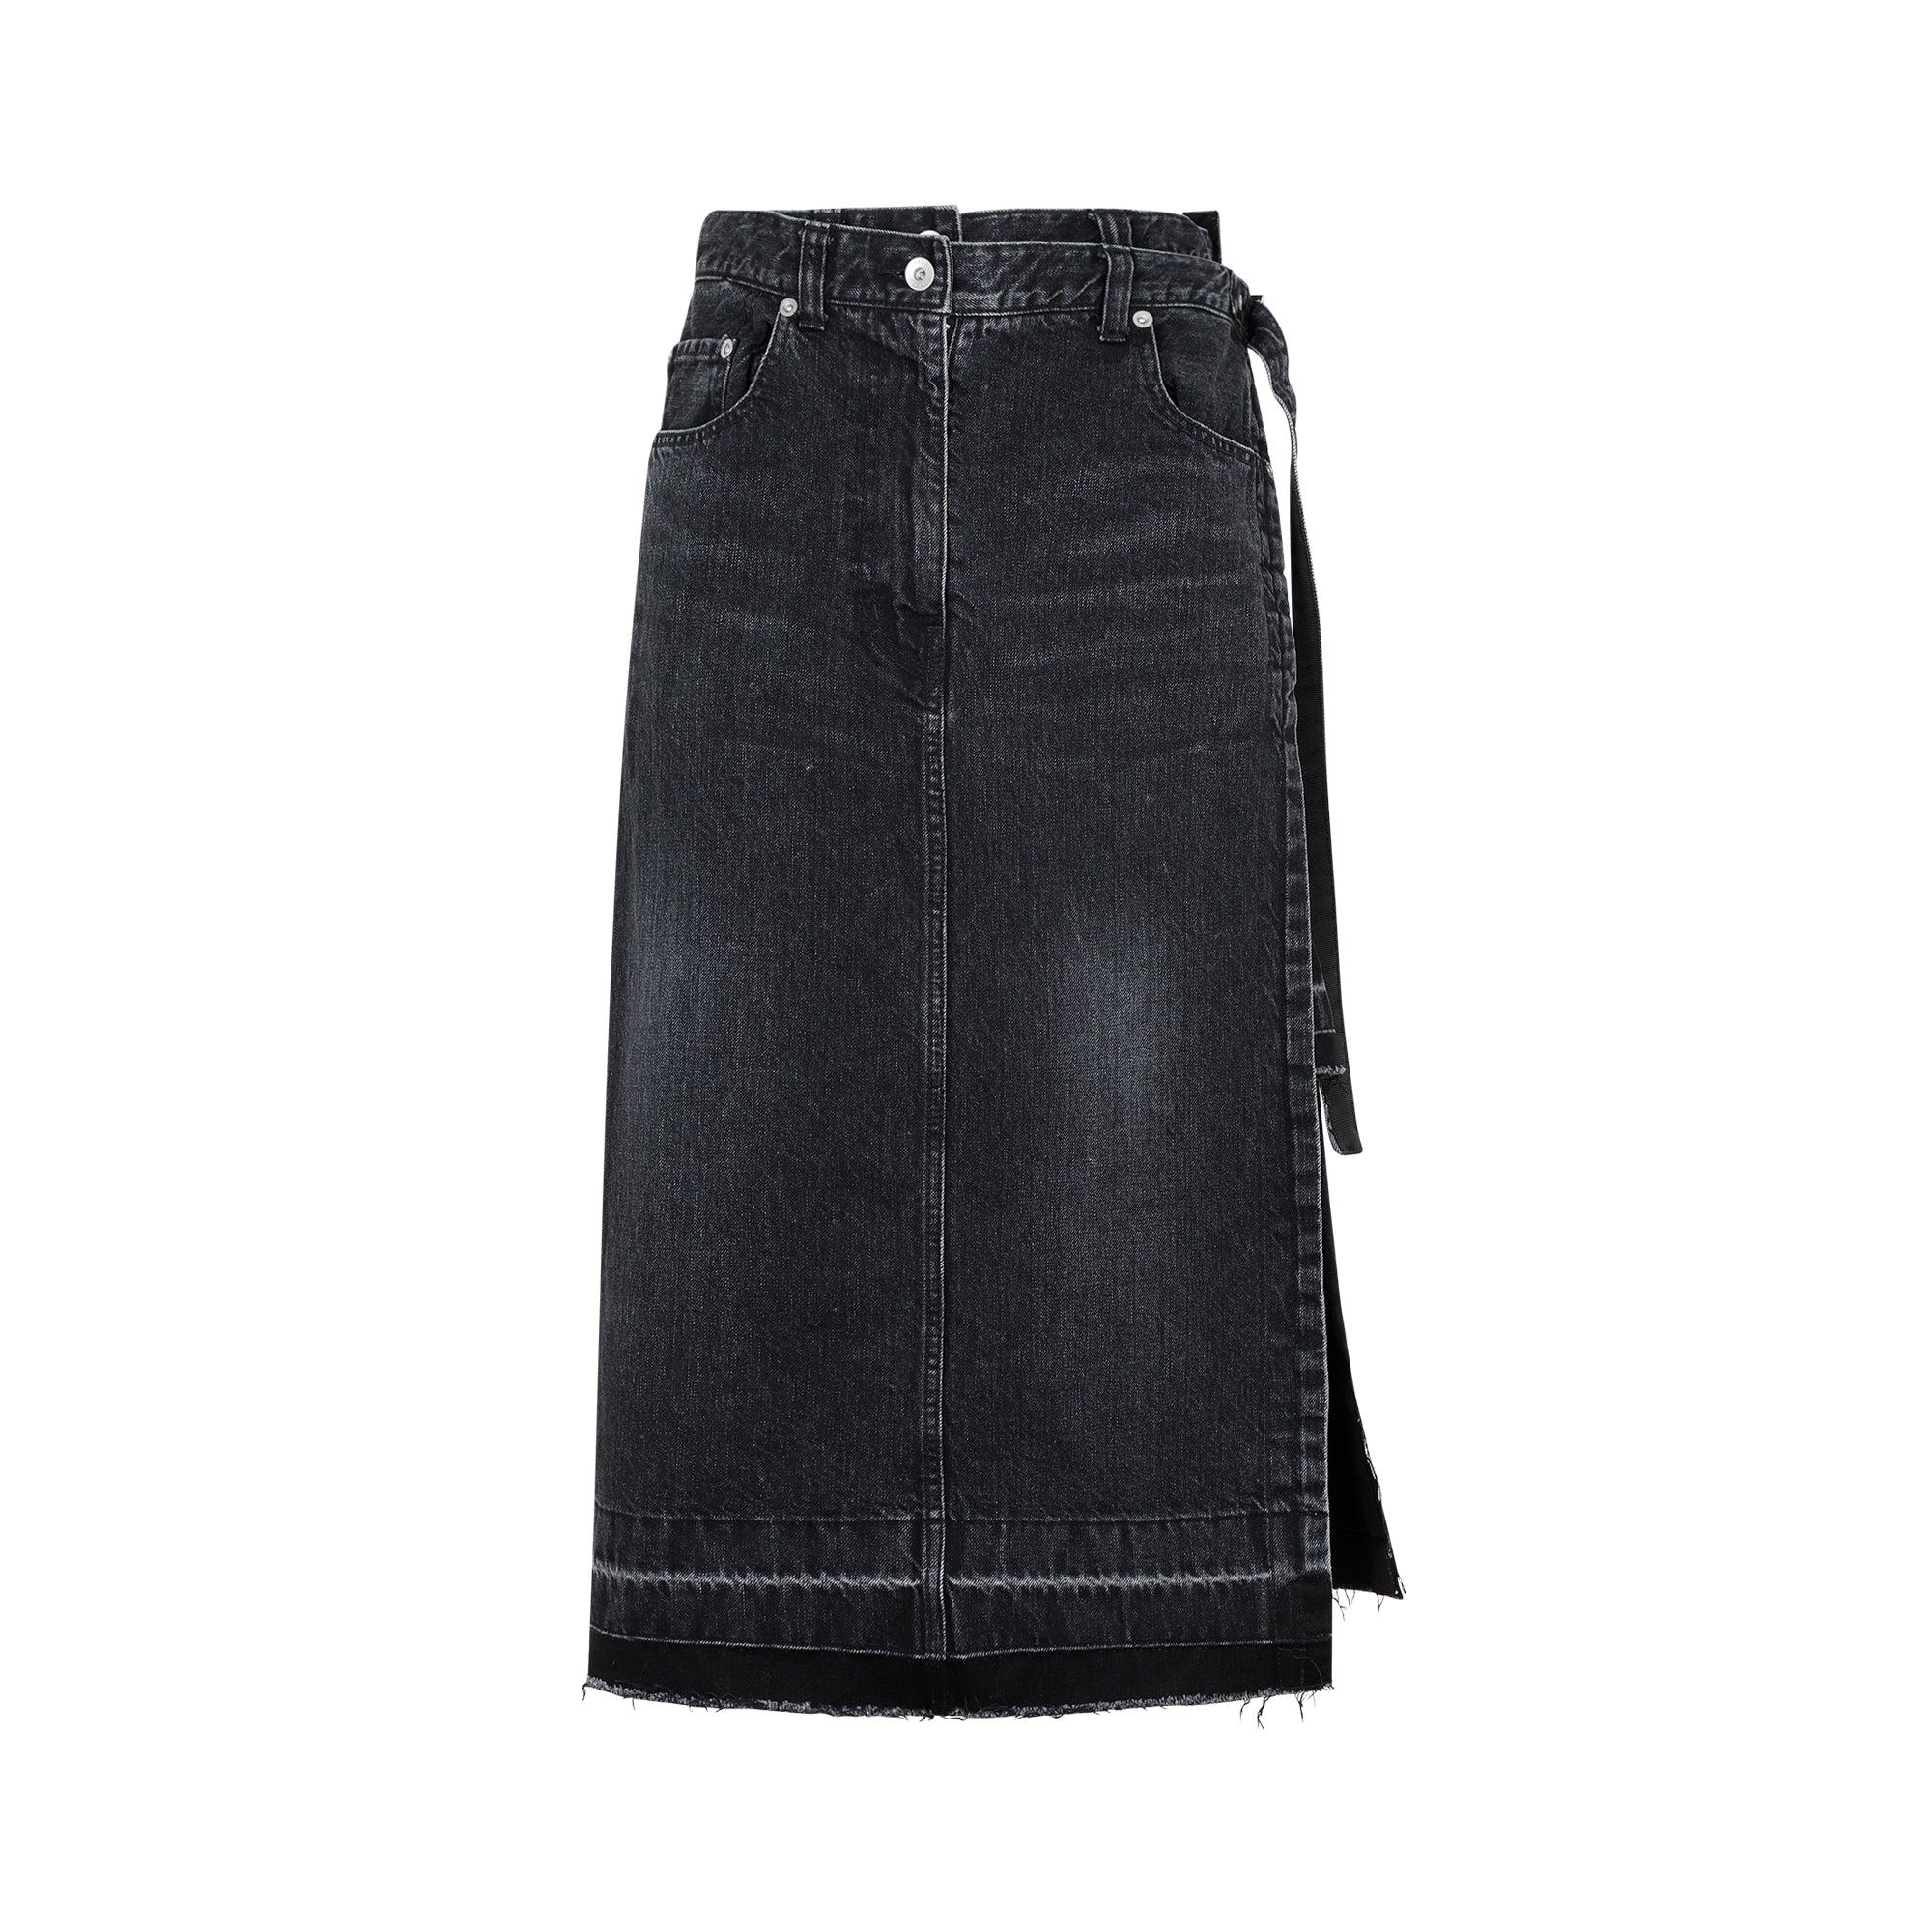 Sacai Denim Skirt in Black | Lyst